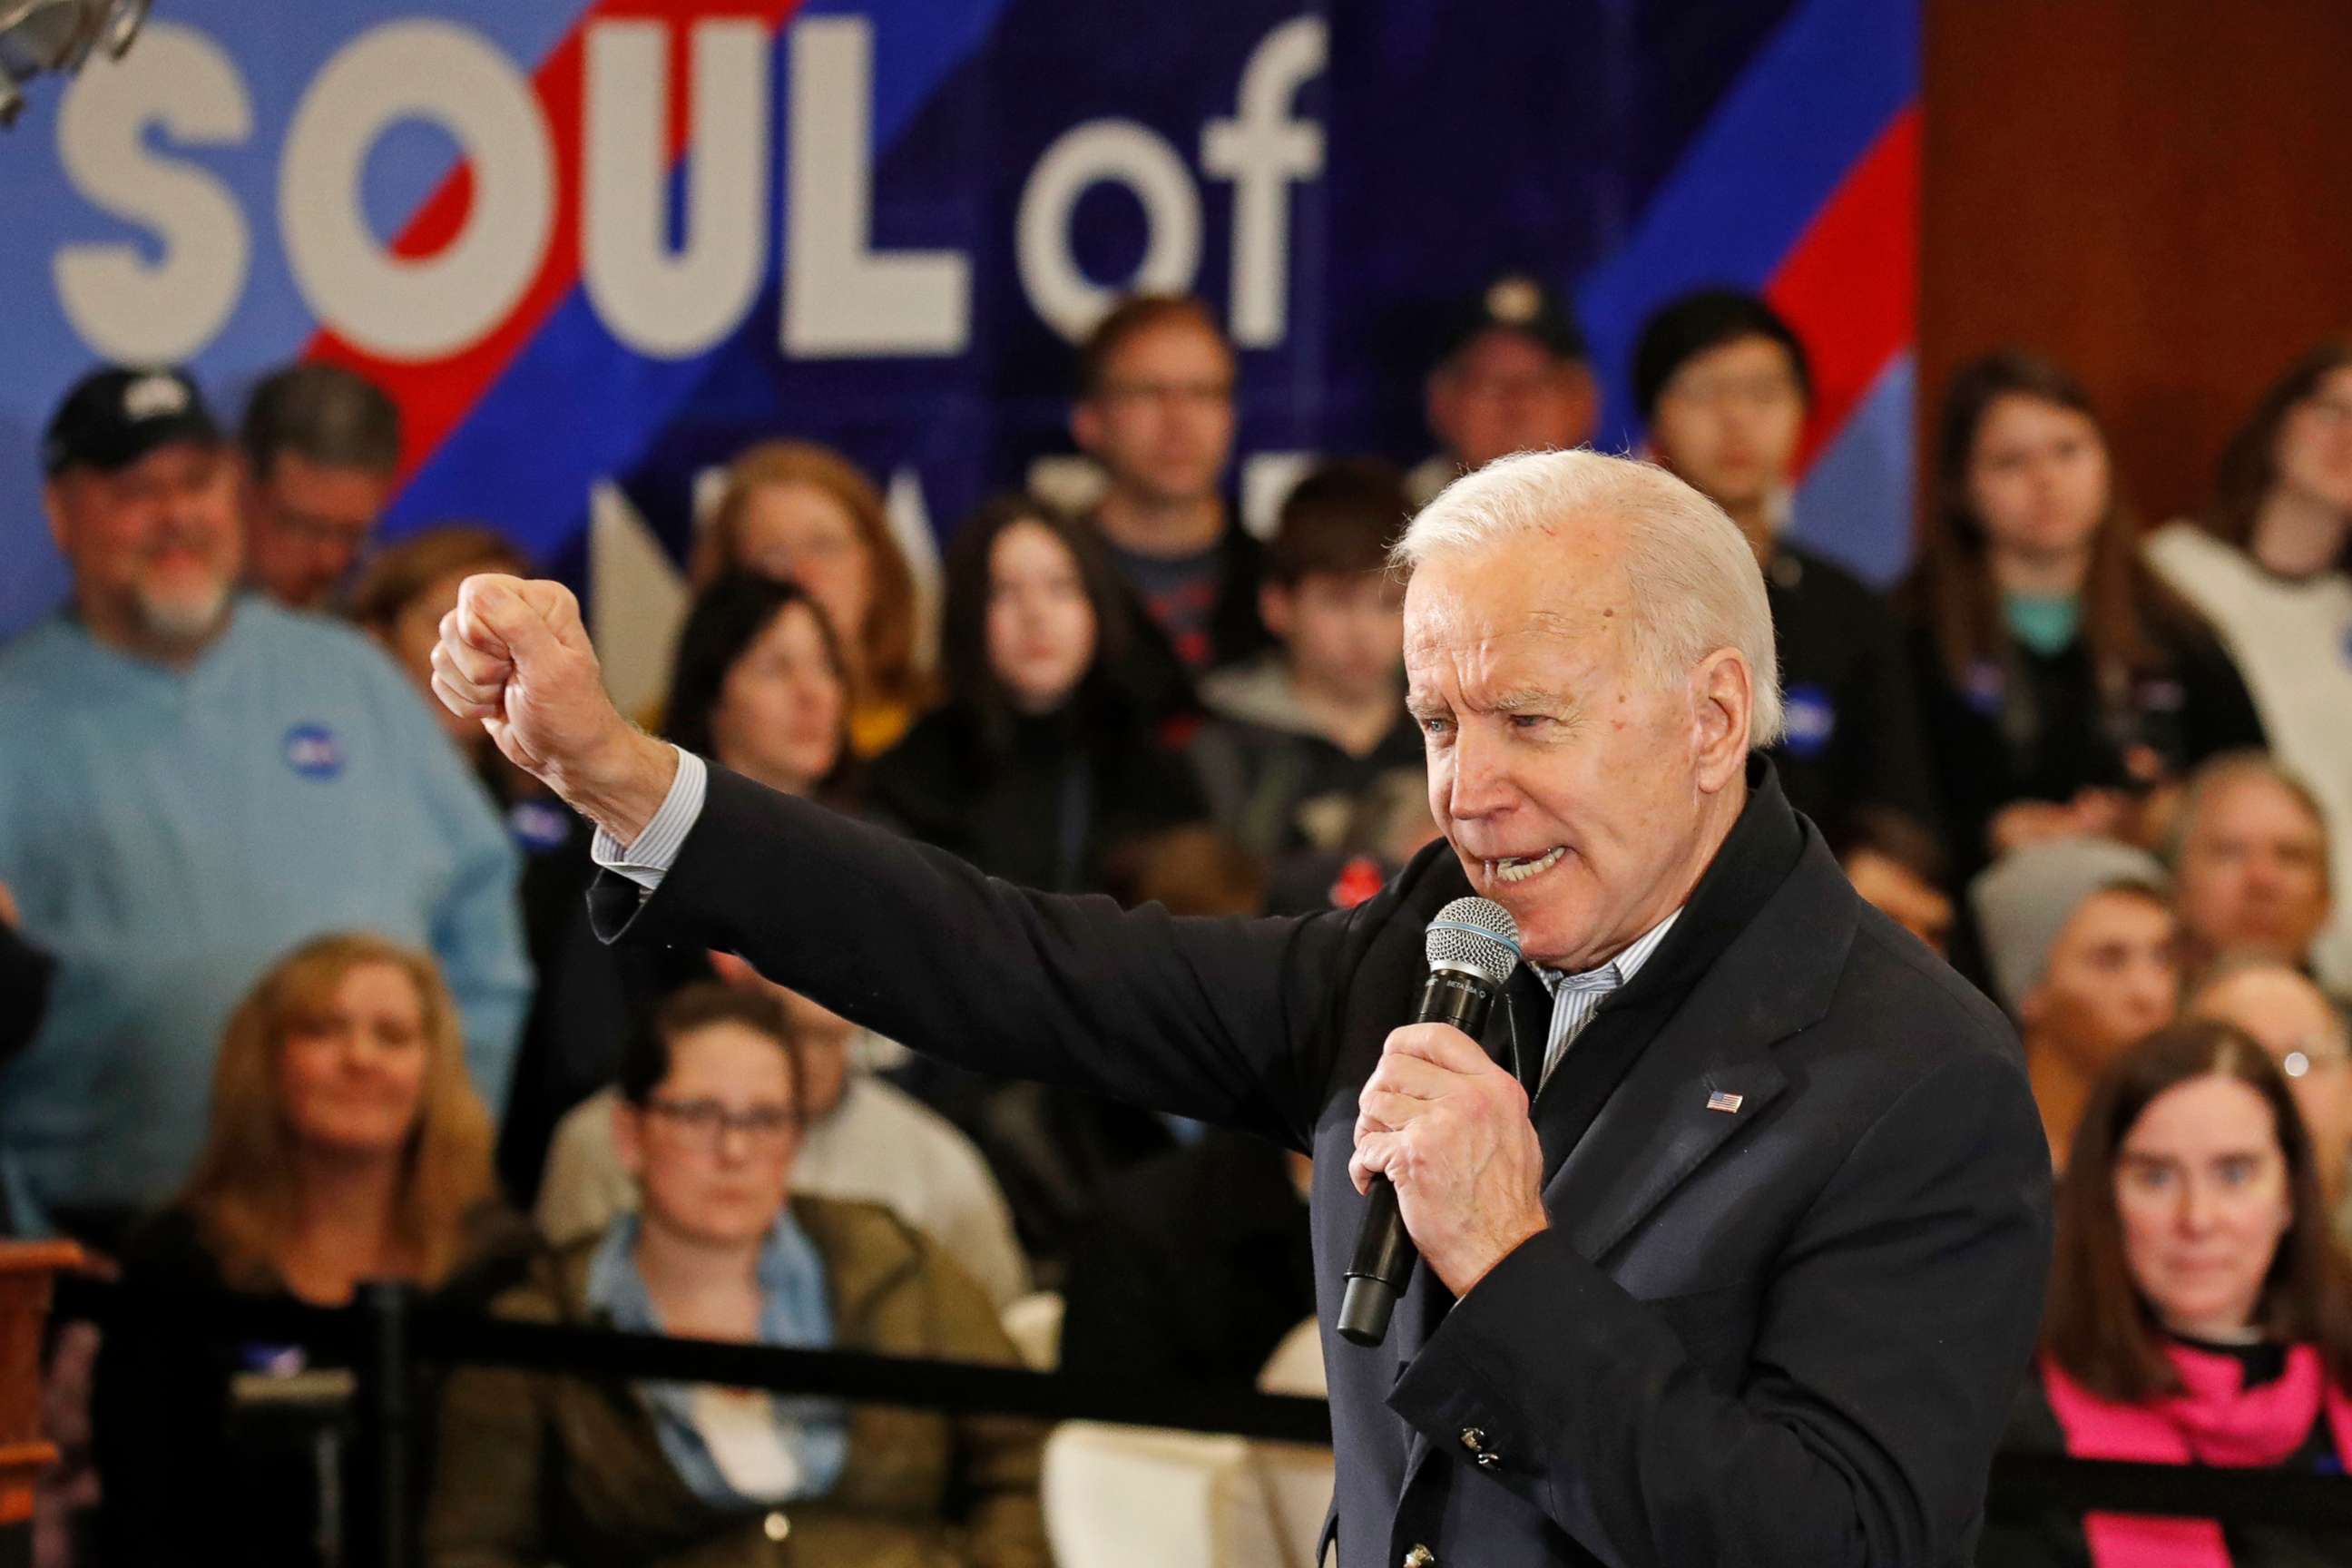 PHOTO: Democratic presidential candidate former Vice President Joe Biden speaks at a campaign event, Feb. 9, 2020, in Hampton, N.H.